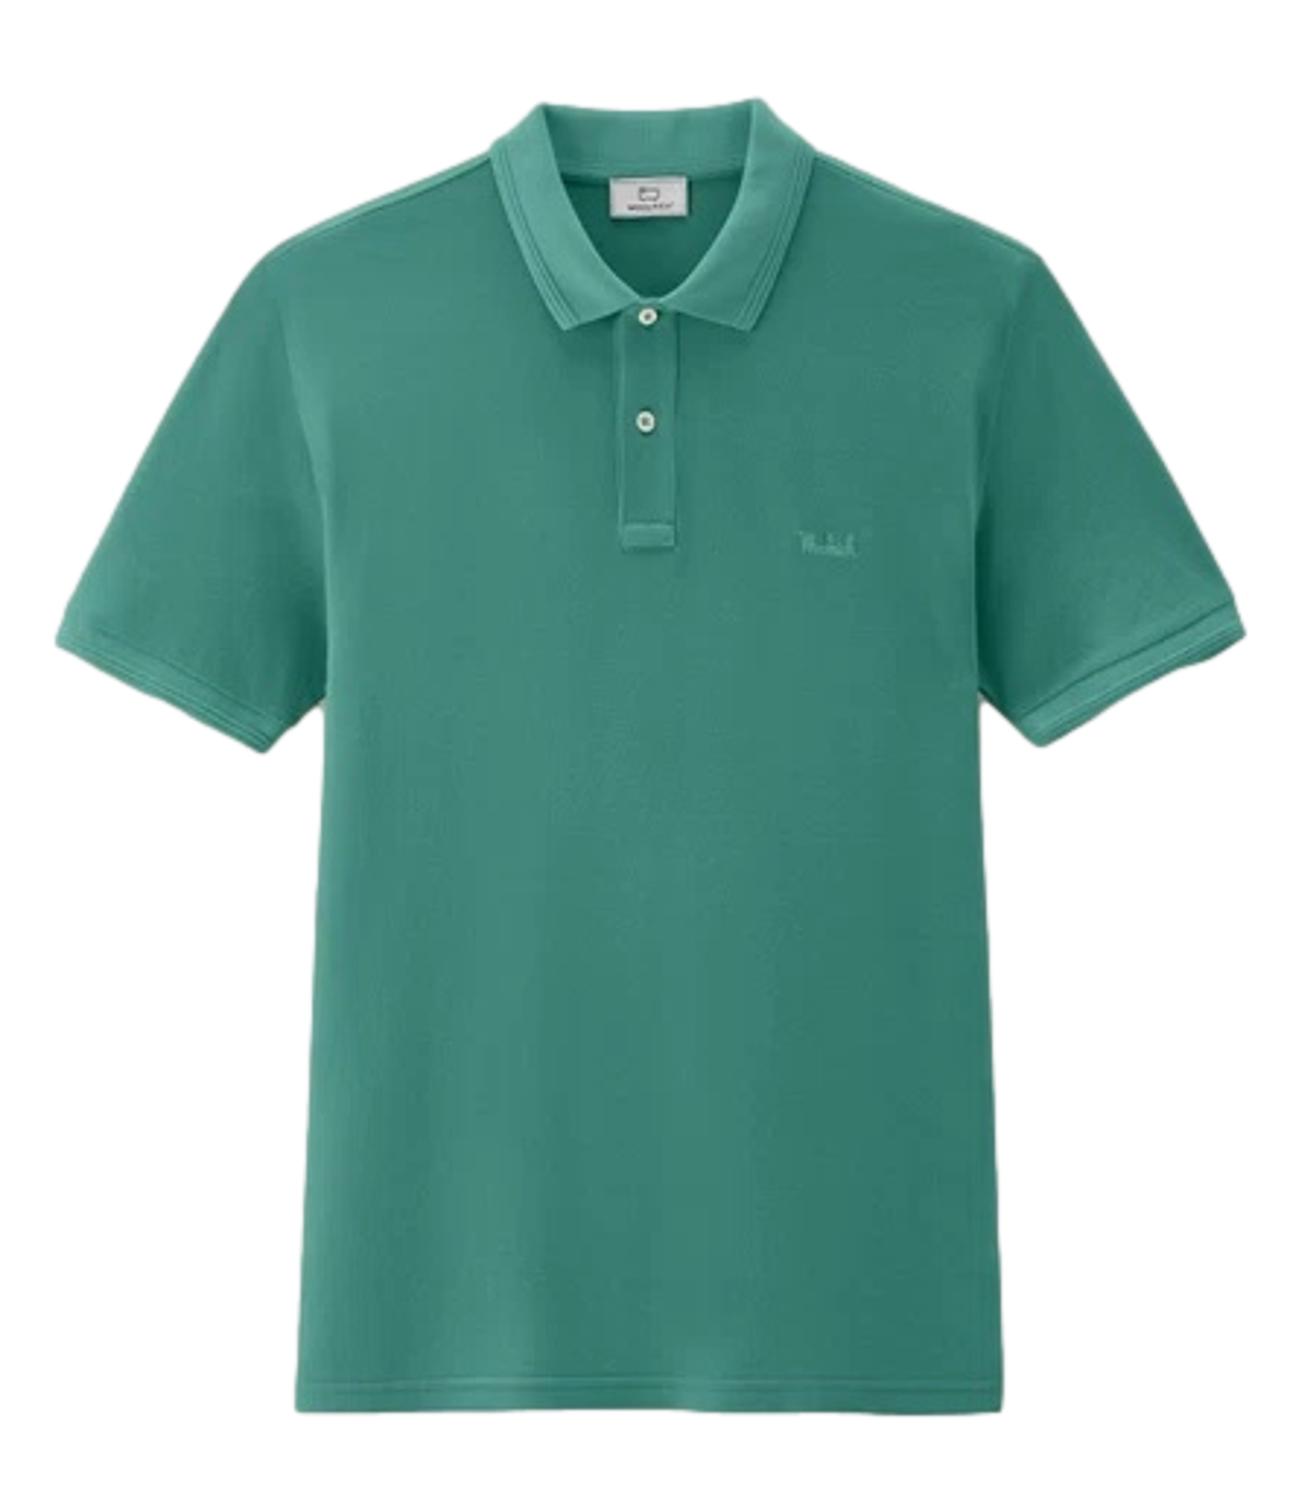 WOOLRICH green stretch cotton piqué polo shirt for men with logo